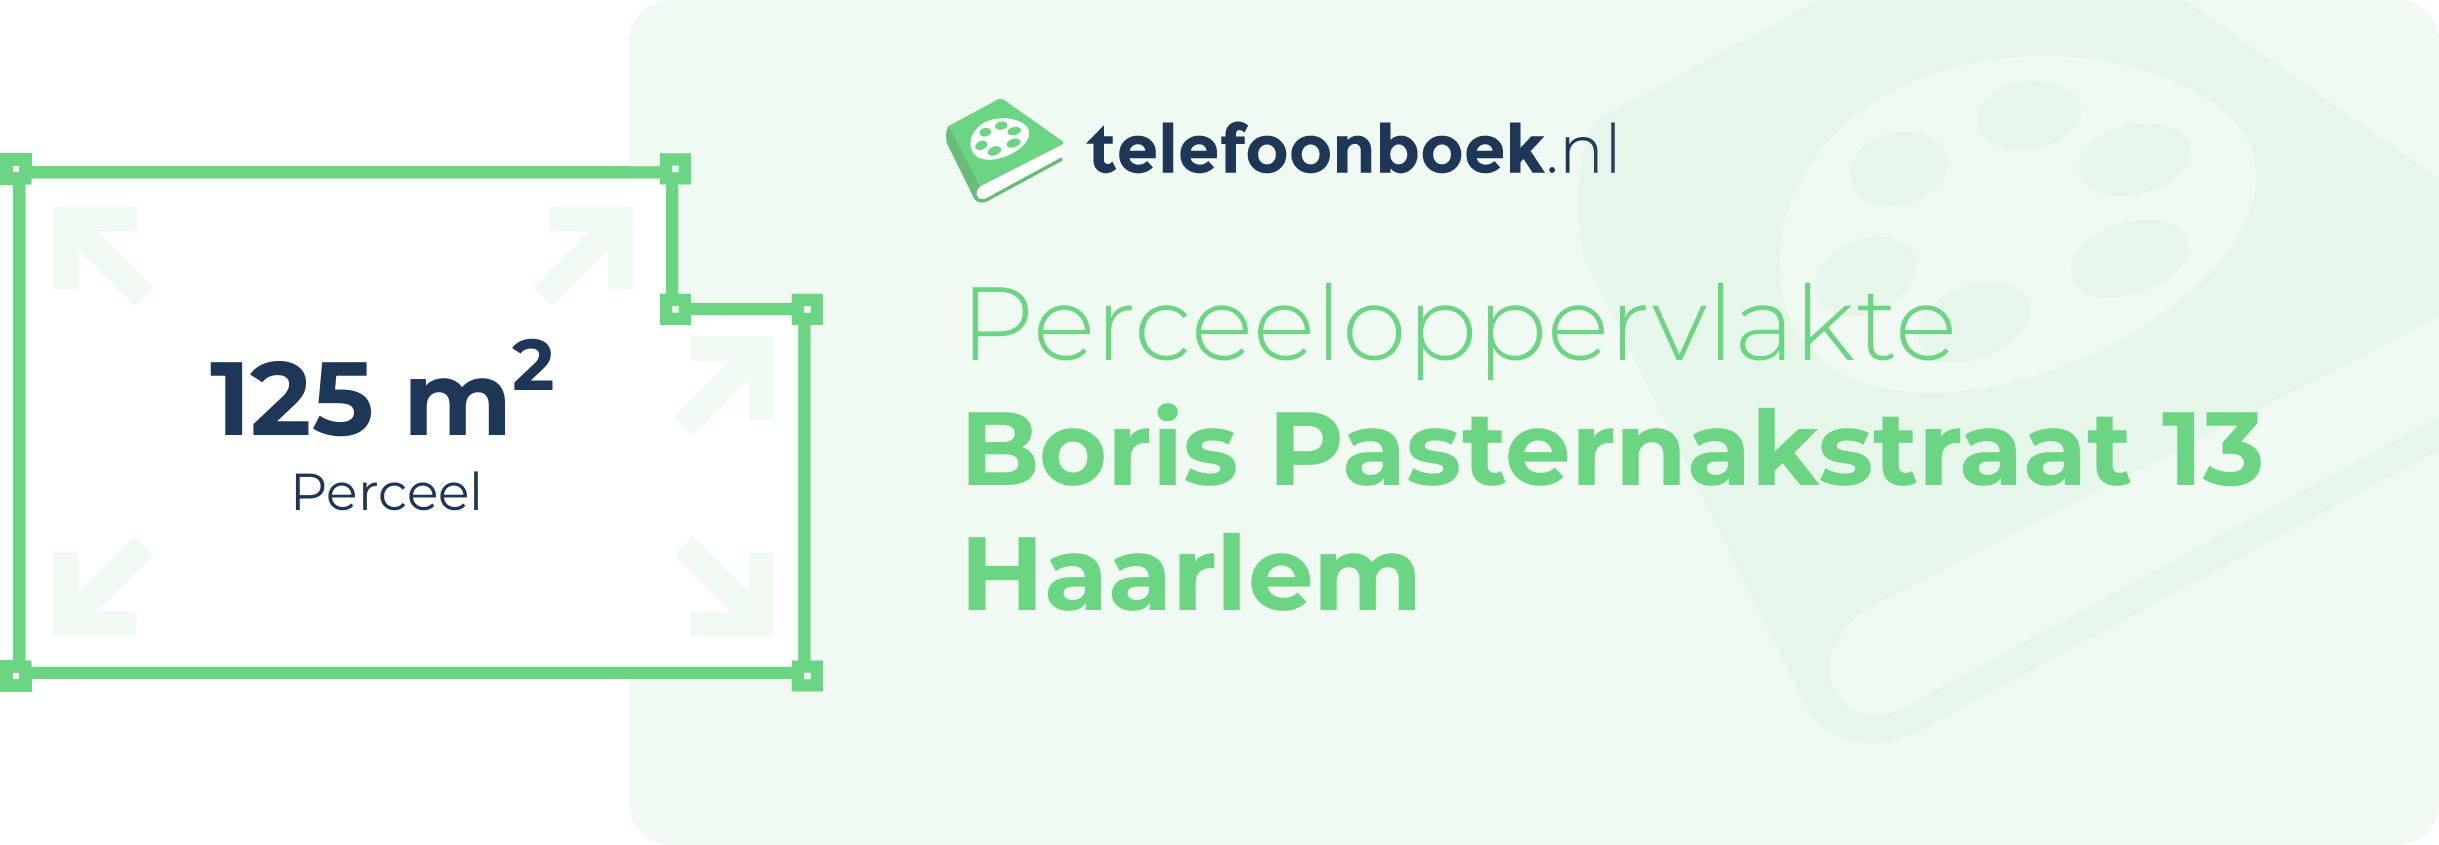 Perceeloppervlakte Boris Pasternakstraat 13 Haarlem